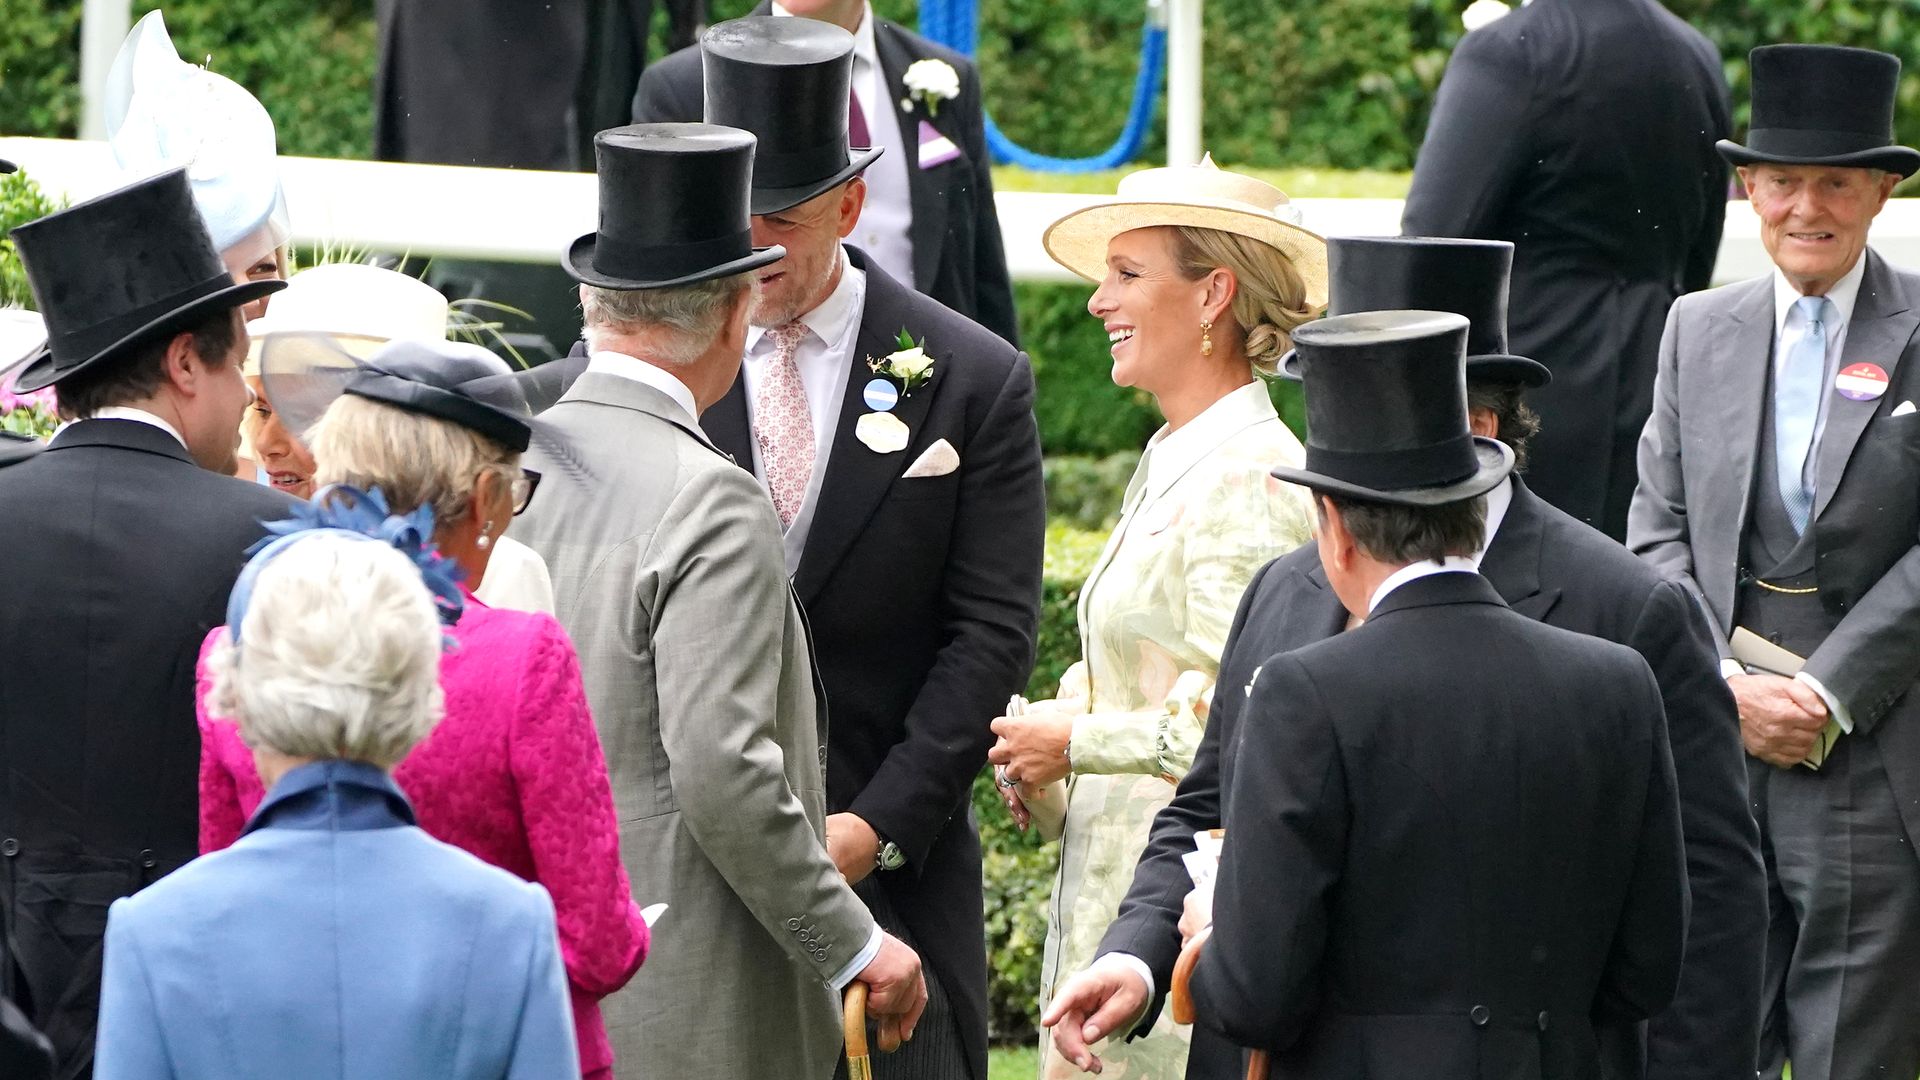 King Charles greets niece Zara Tindall in the sweetest way at Royal